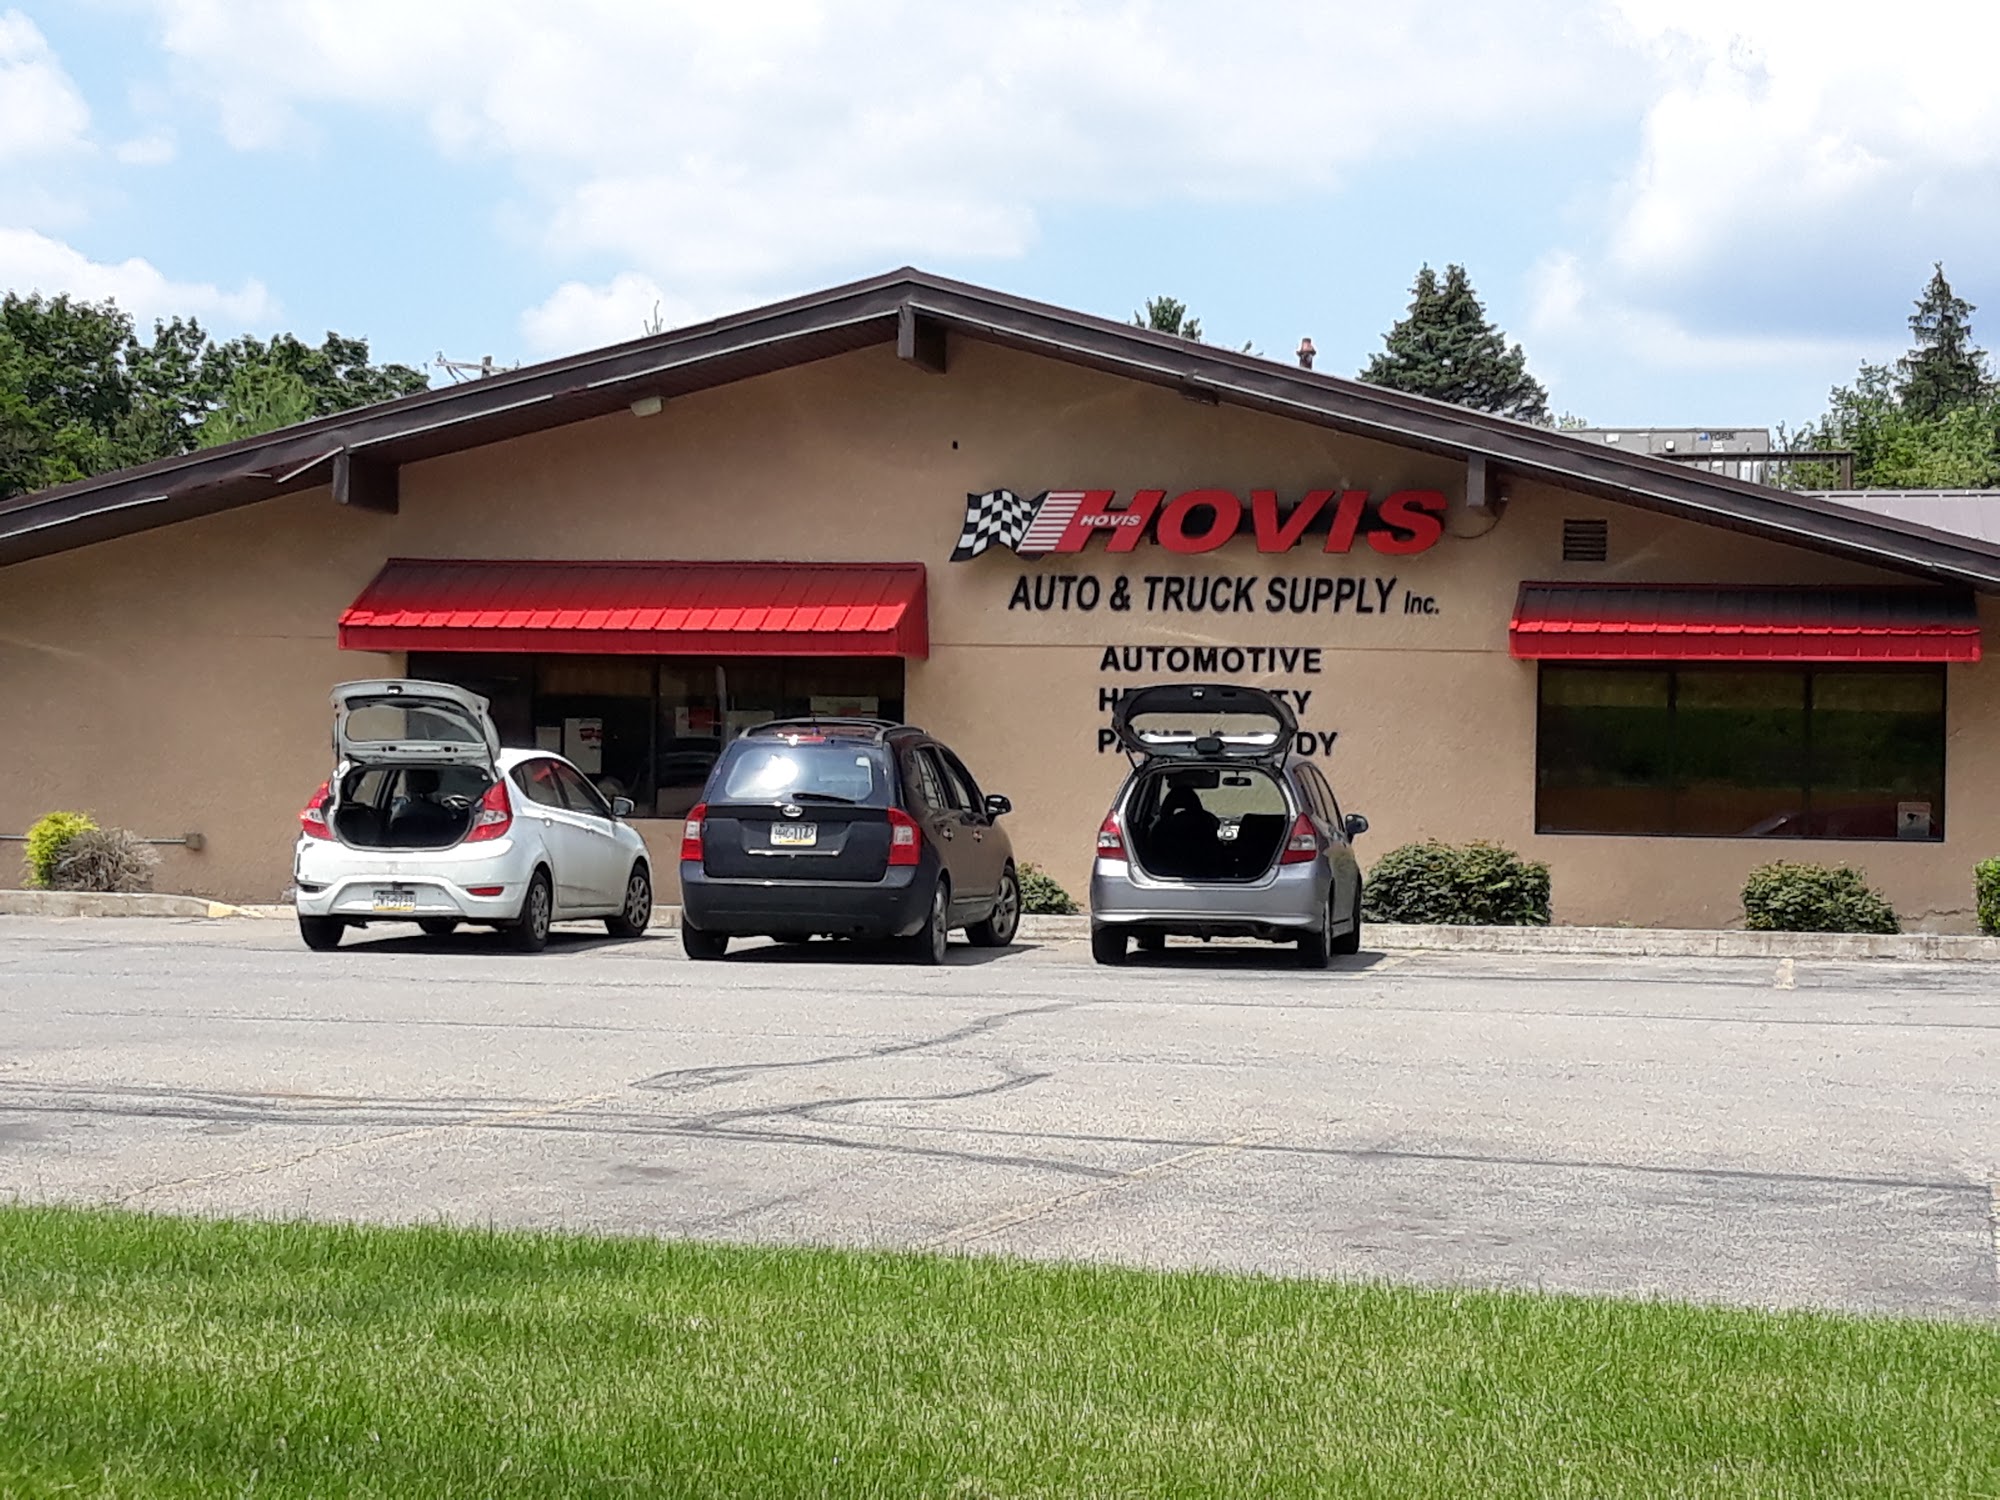 Hovis Auto & Truck Supply Inc